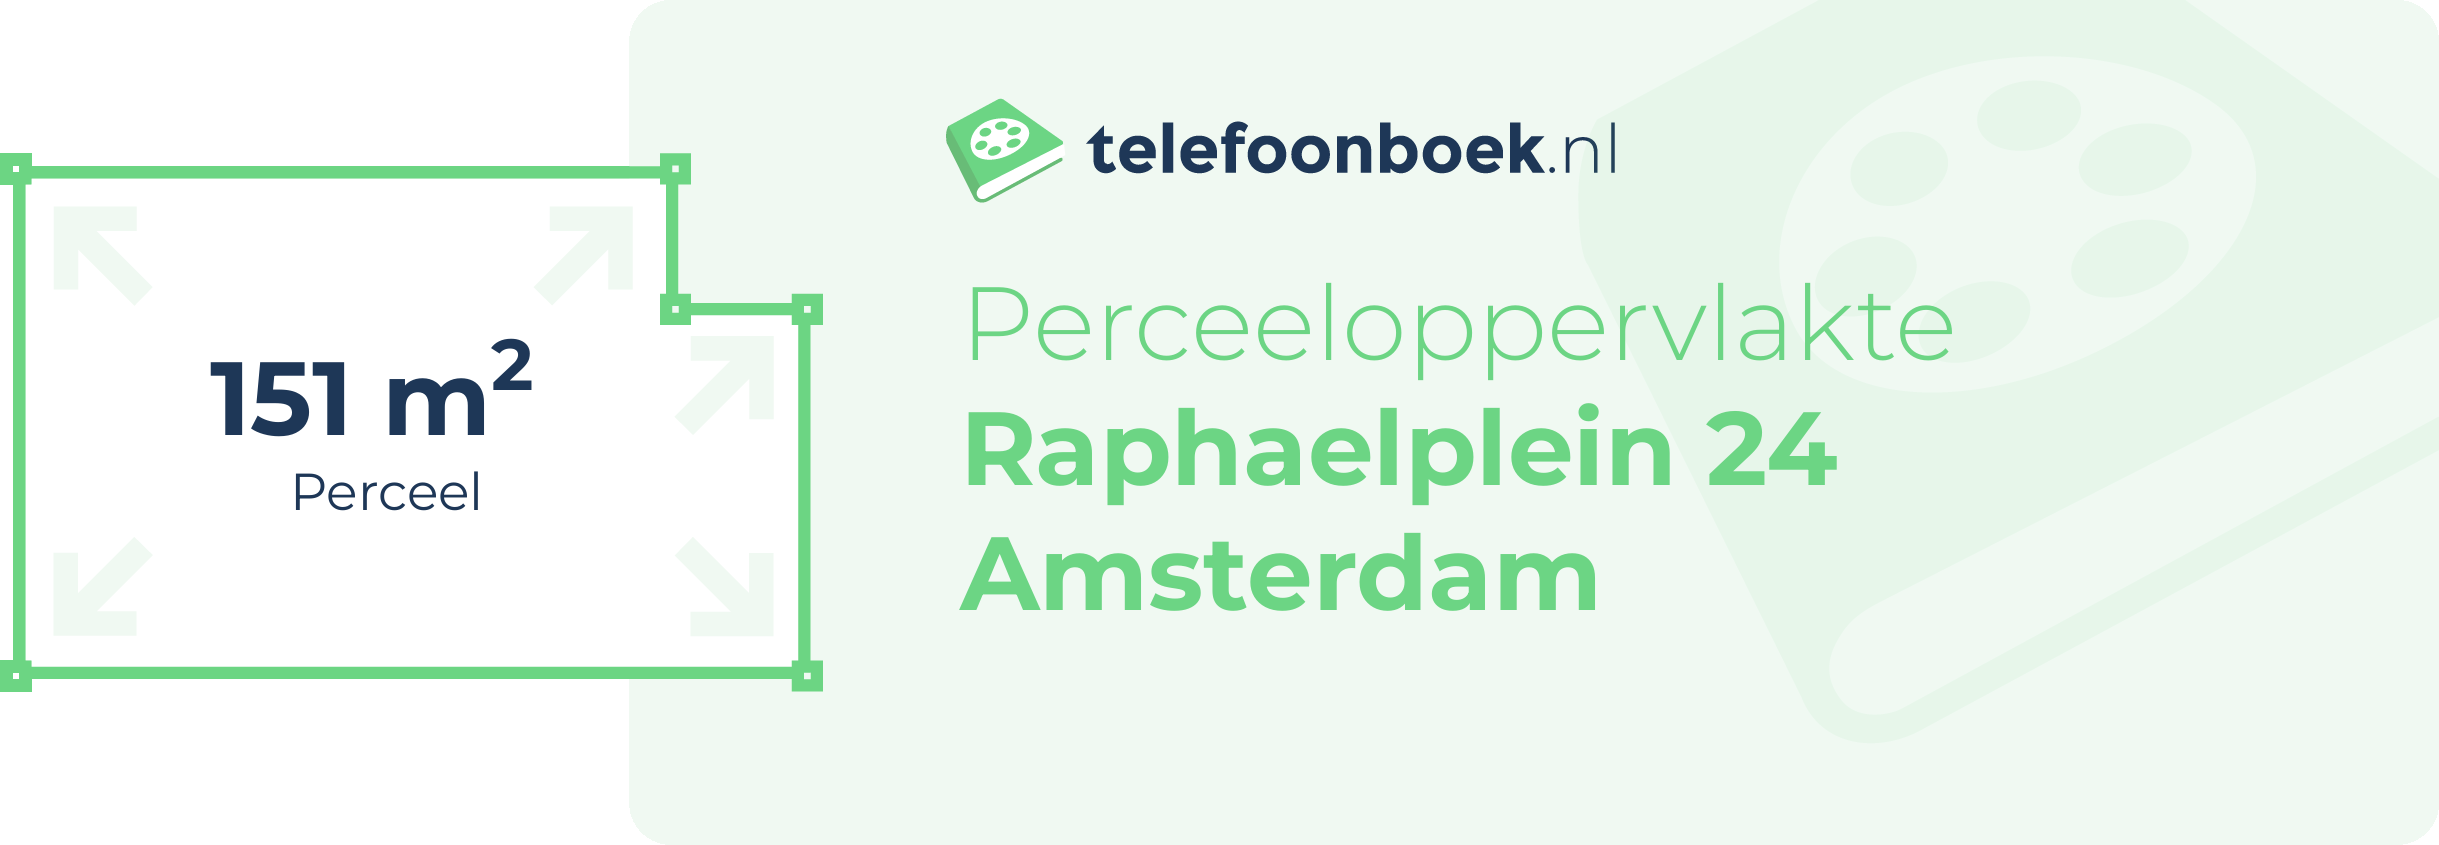 Perceeloppervlakte Raphaelplein 24 Amsterdam